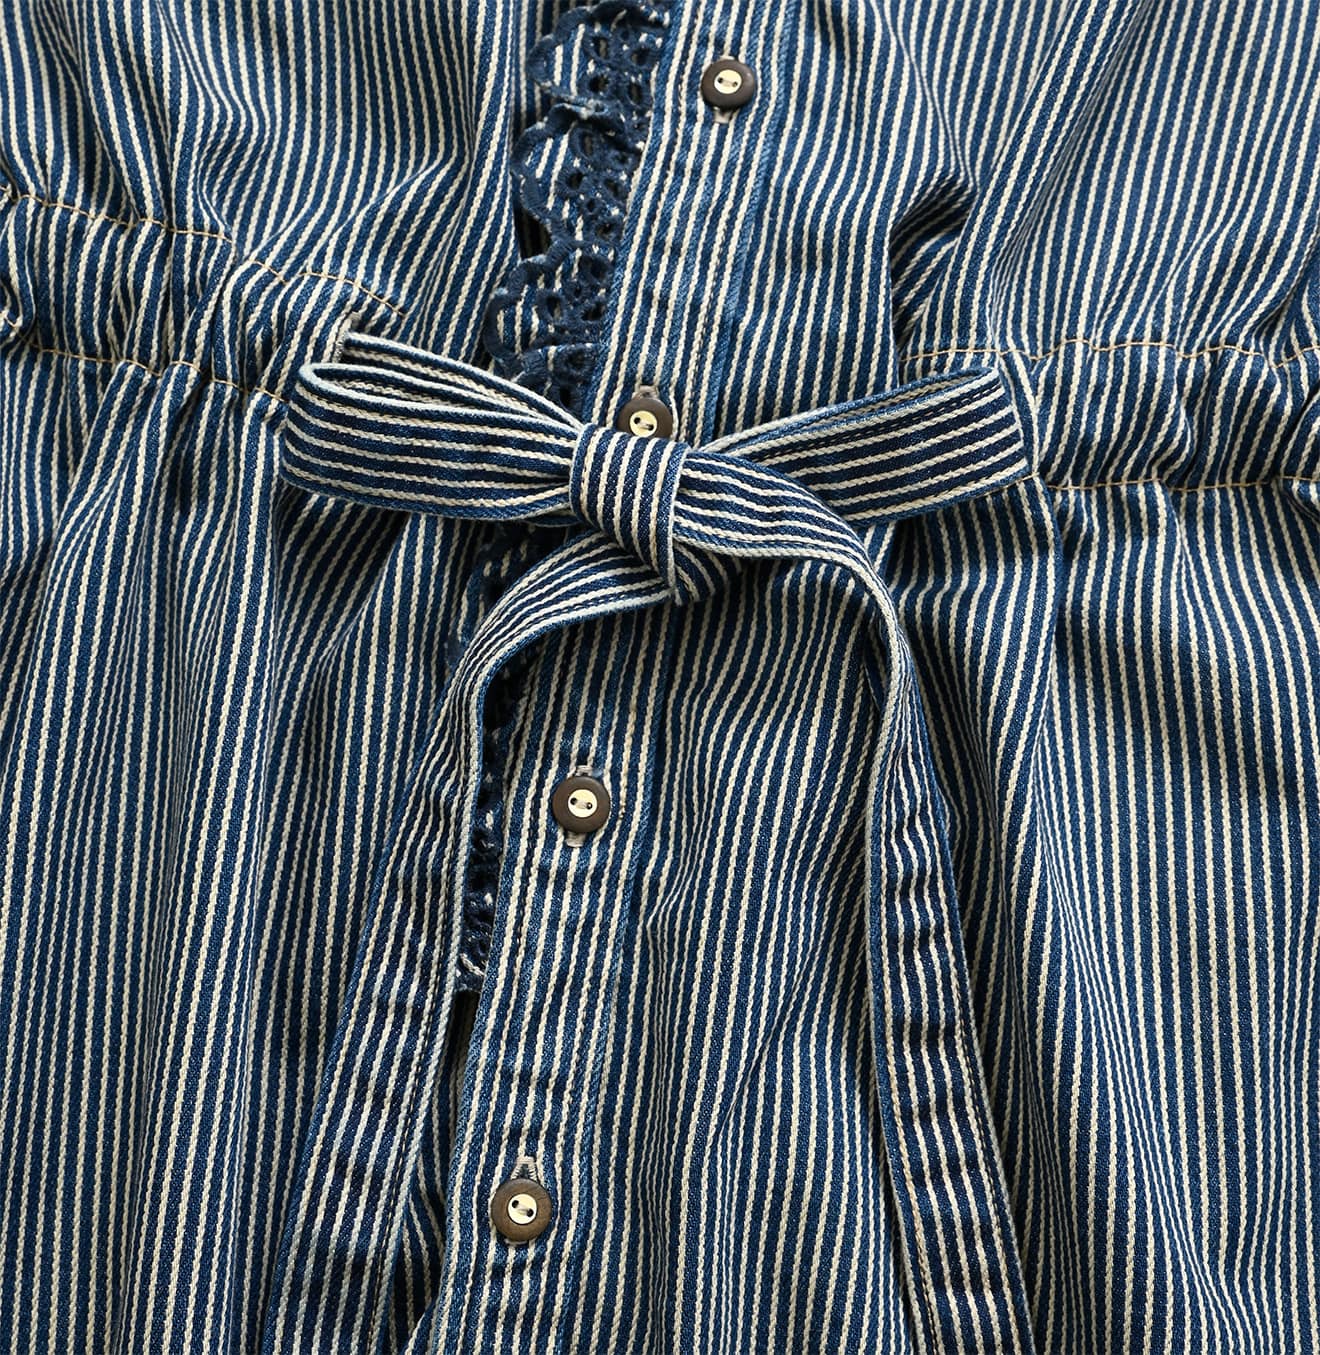 Shirt Denim Cutwork Frilled Dress Distressed